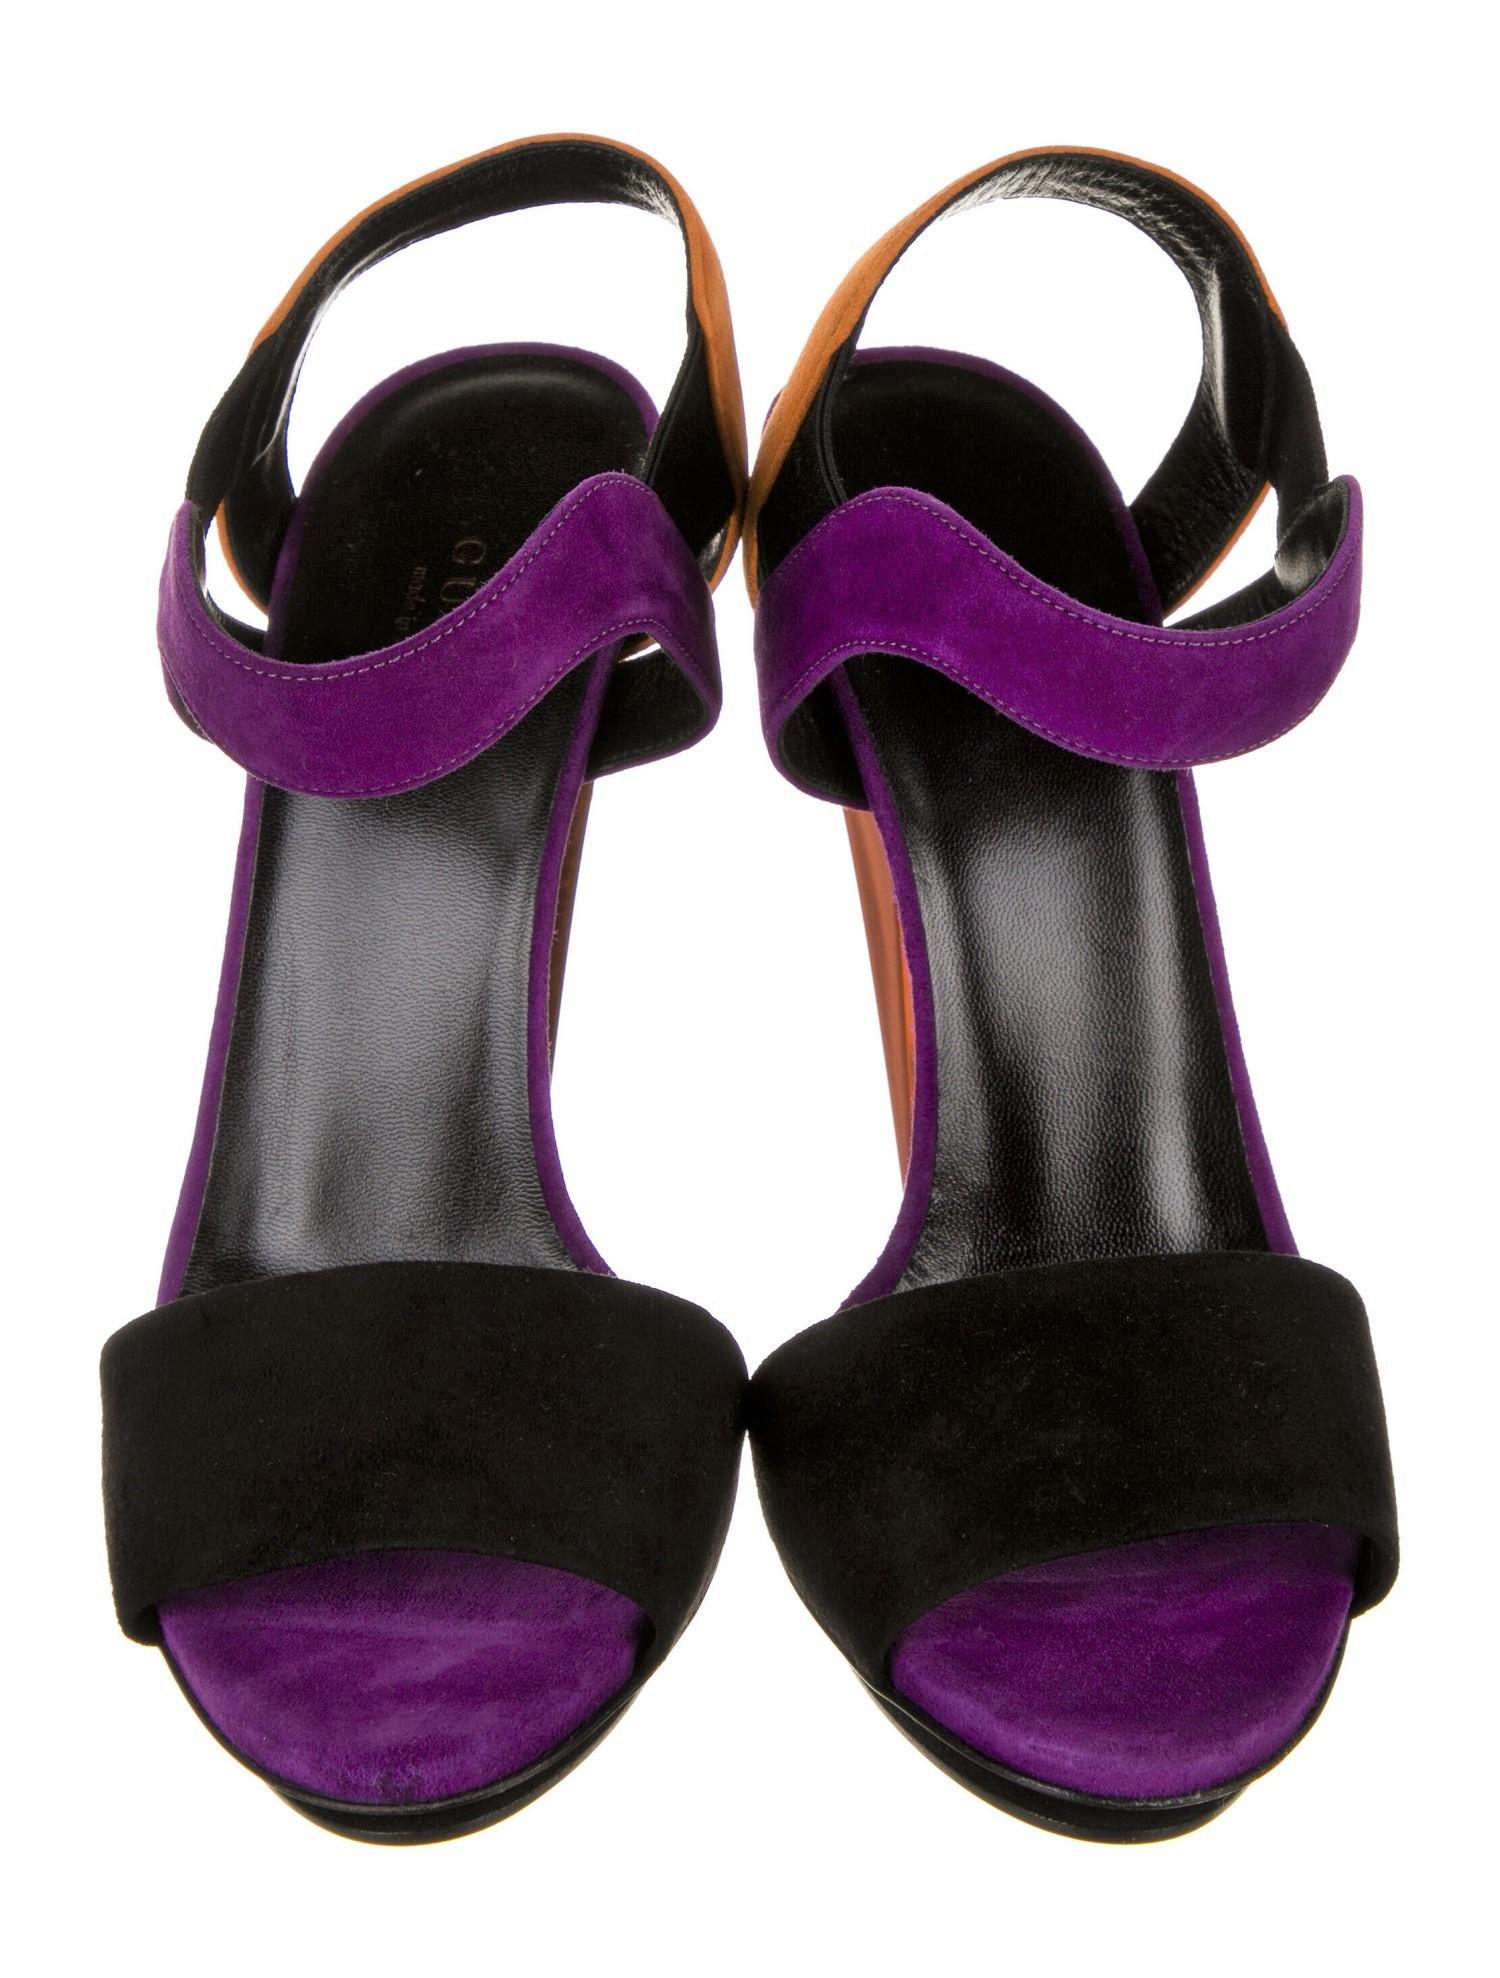 New Gucci Ad Runway 2014 Purple Orange Suede Mirrored Pump Heels Sz 39 For Sale 3